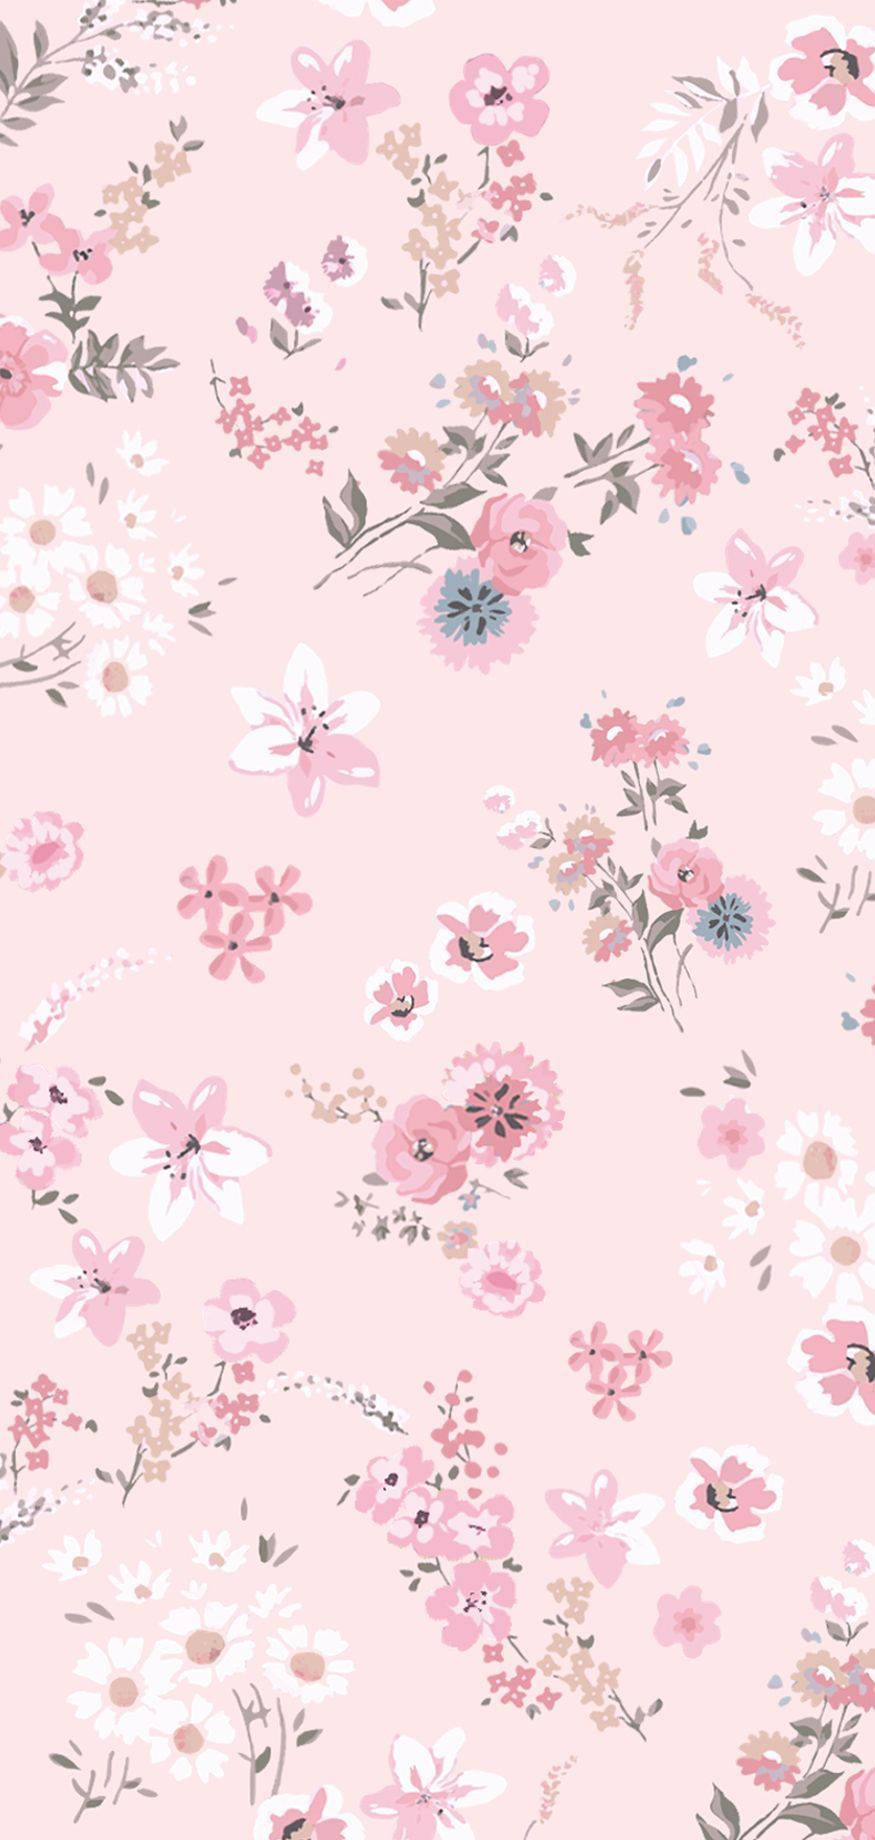 Free Vector  Watercolor floral mobile screen wallpaper